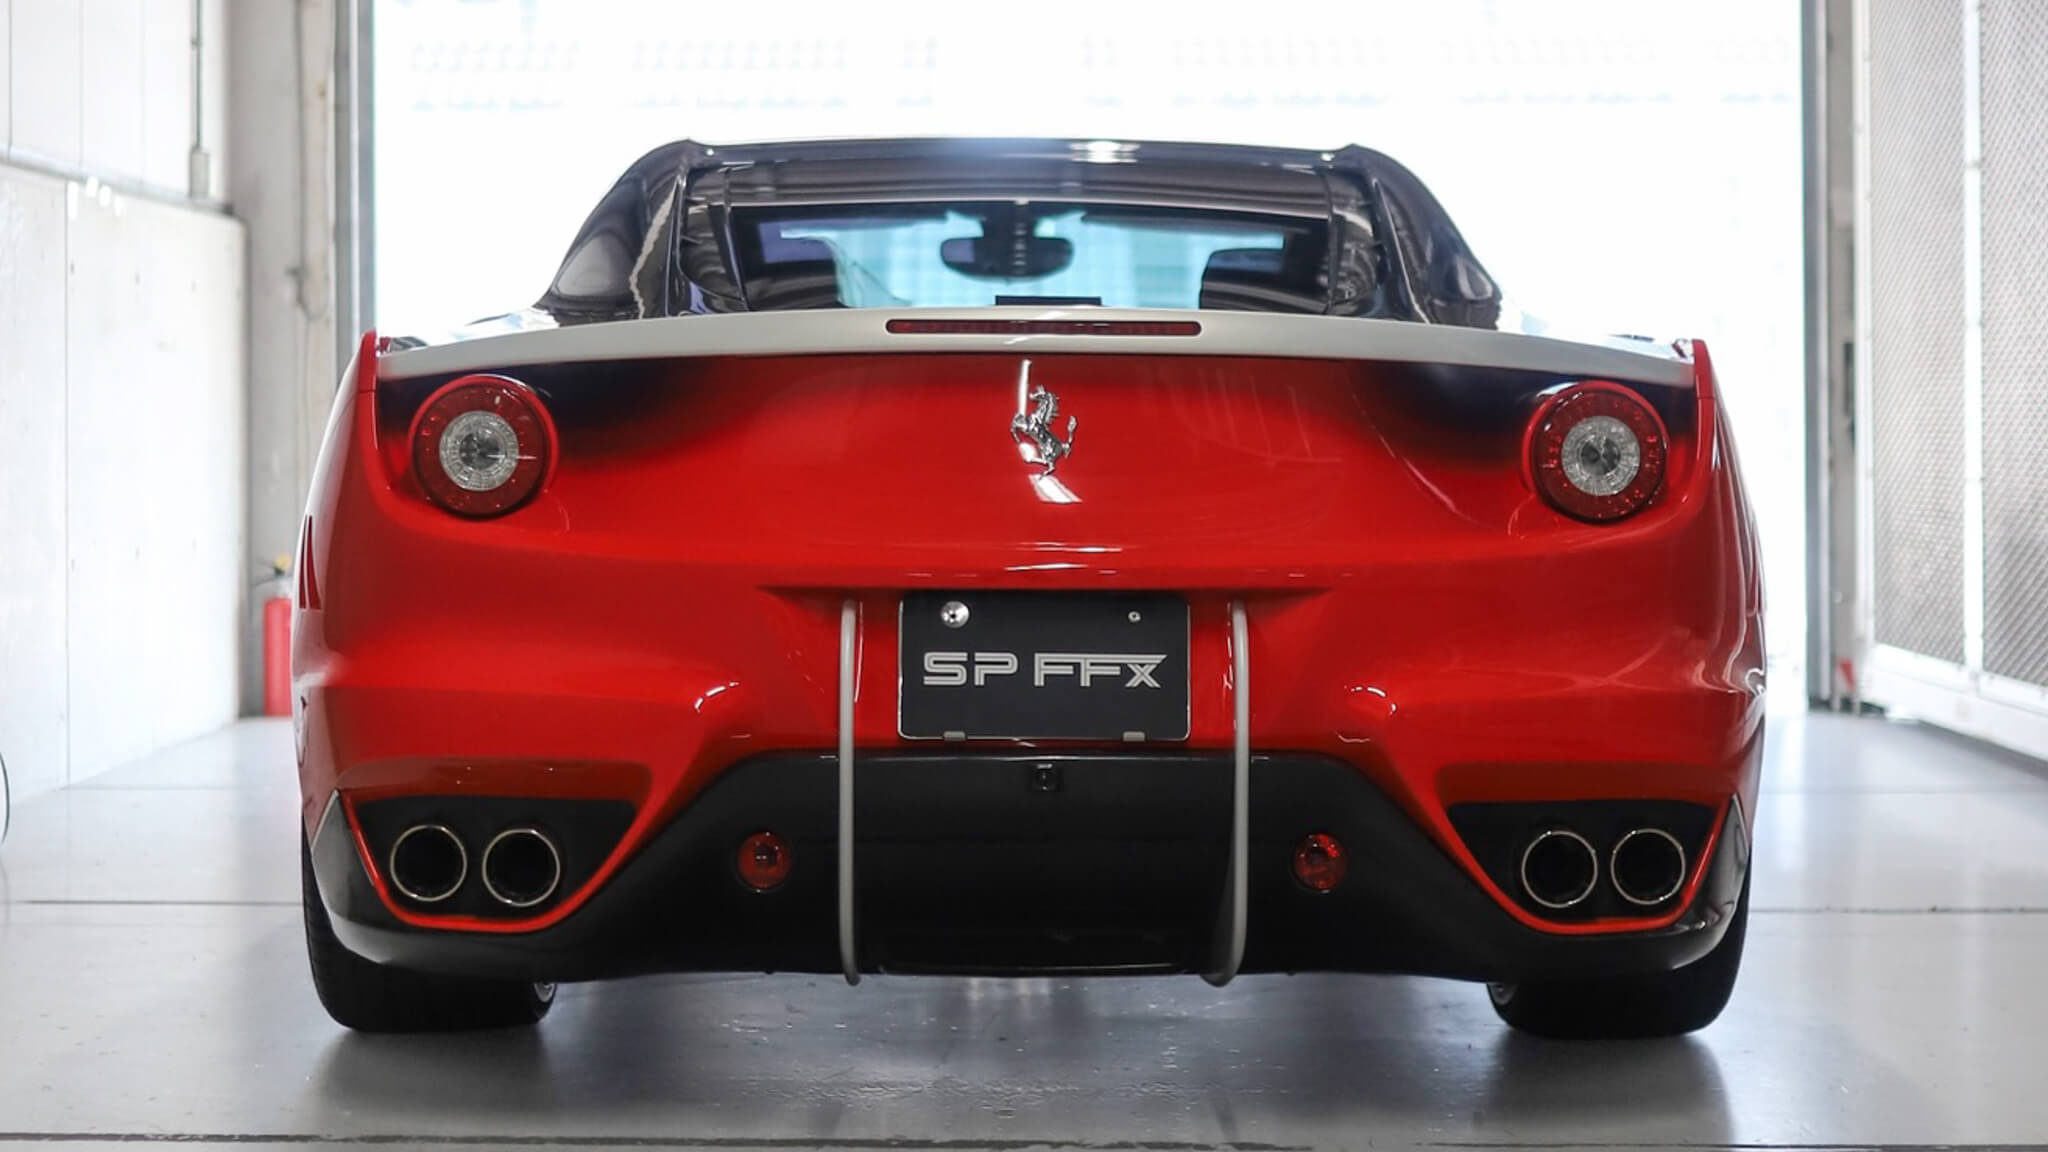 2013 Ferrari SP FFX rear